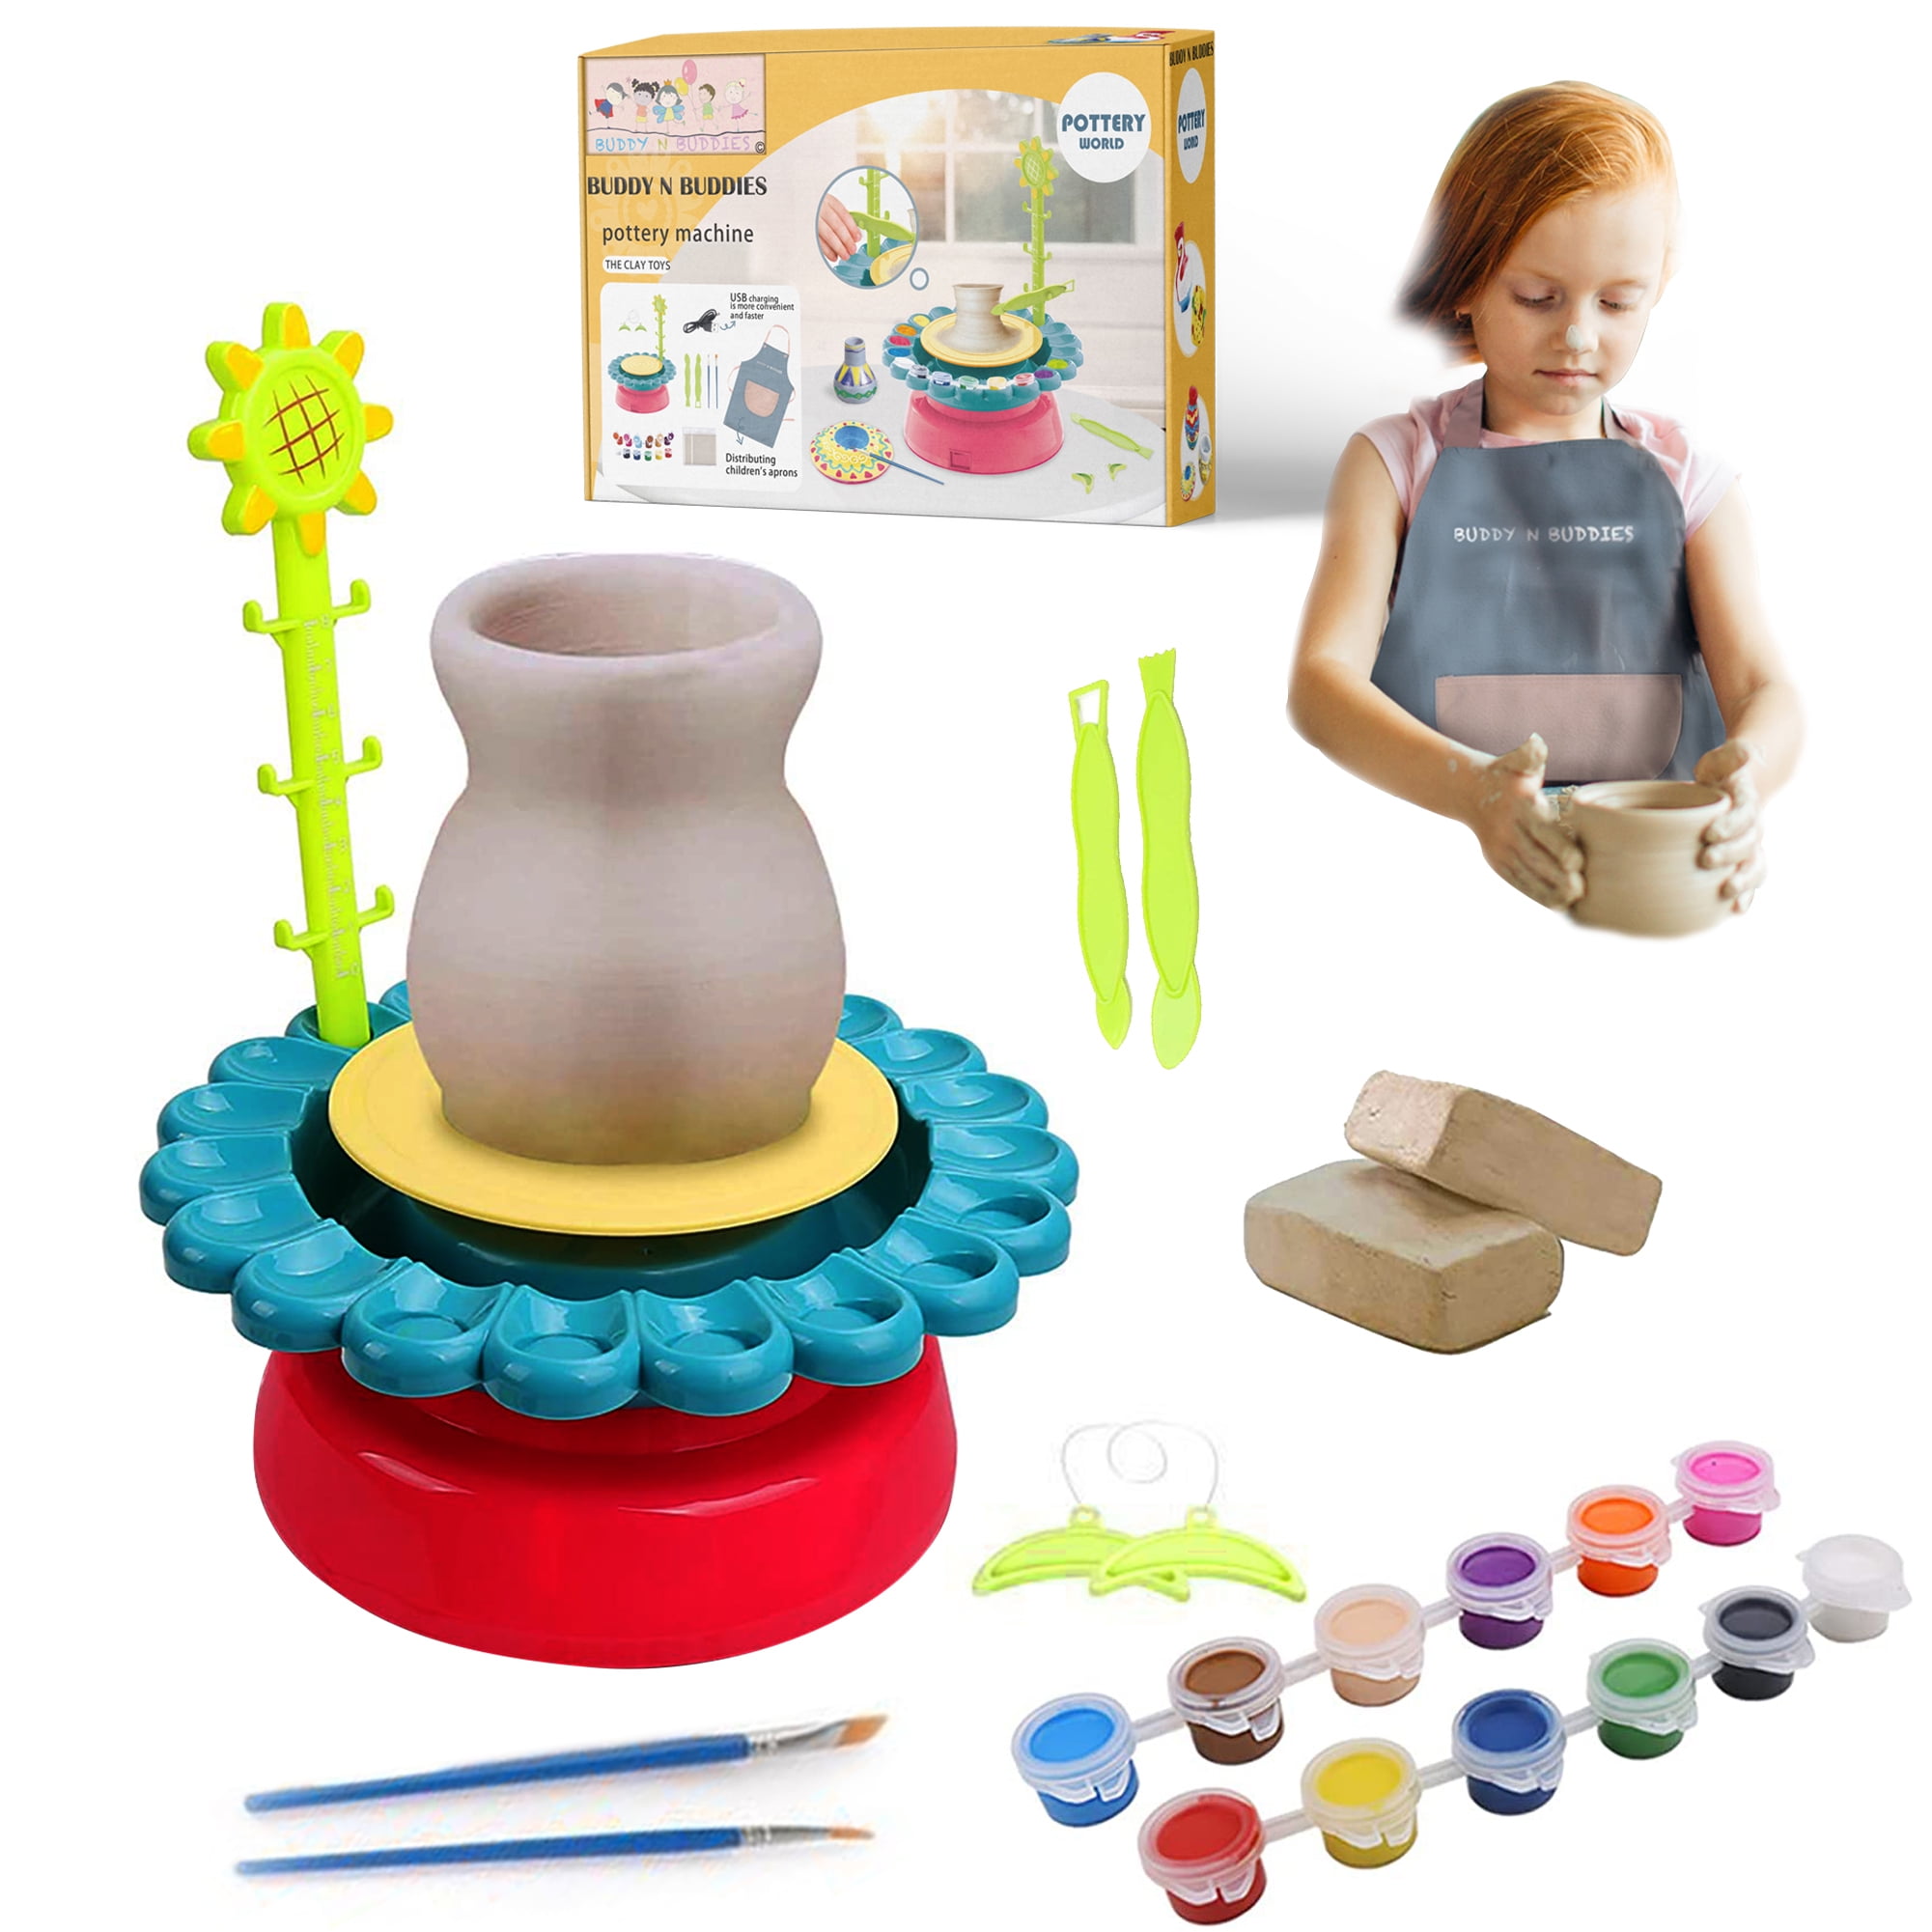 Buddy N Buddies- Pottery Studio, Clay Pottery Wheel Craft Kid for Kids